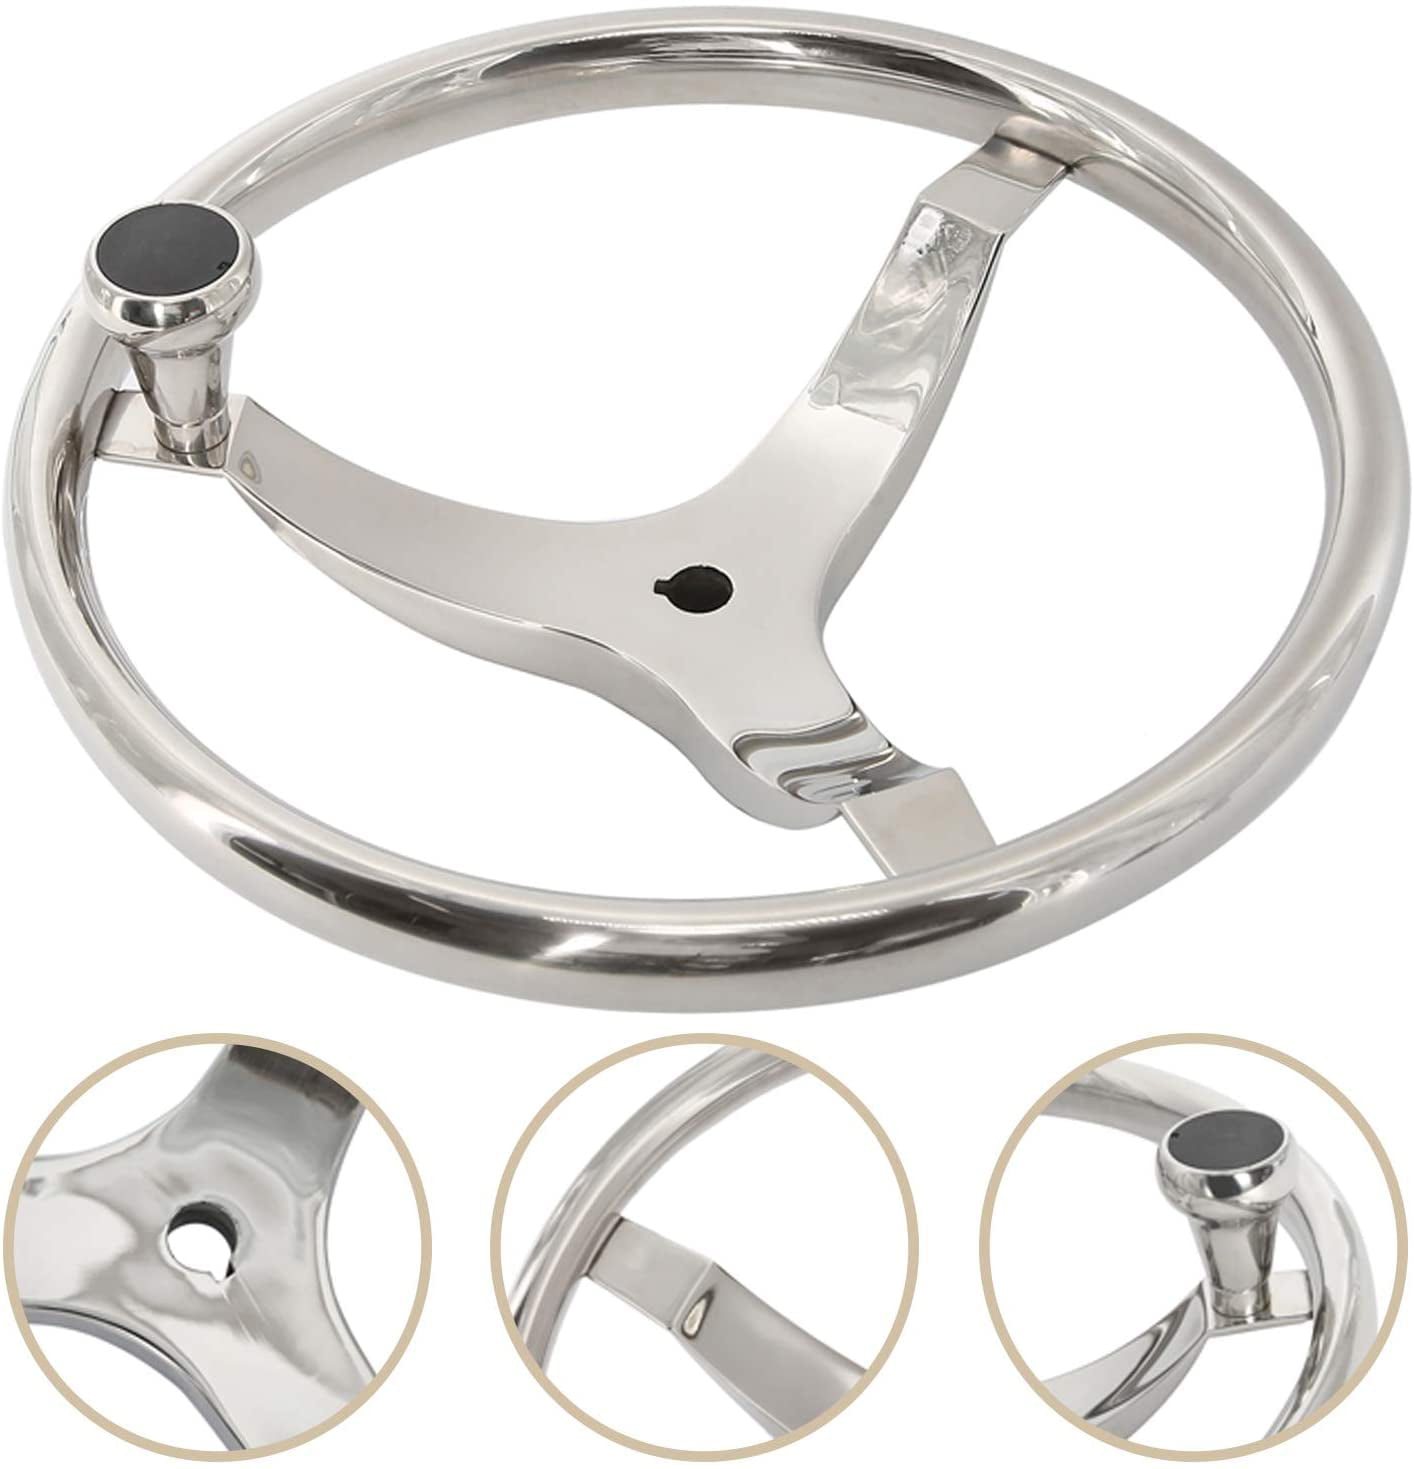 DasMarine Stainless Steel 13-1/2 Sport Wheel Boat Steering Wheel With Control Knob,Fit 3/4 Shaft,7/8 Rim Size 